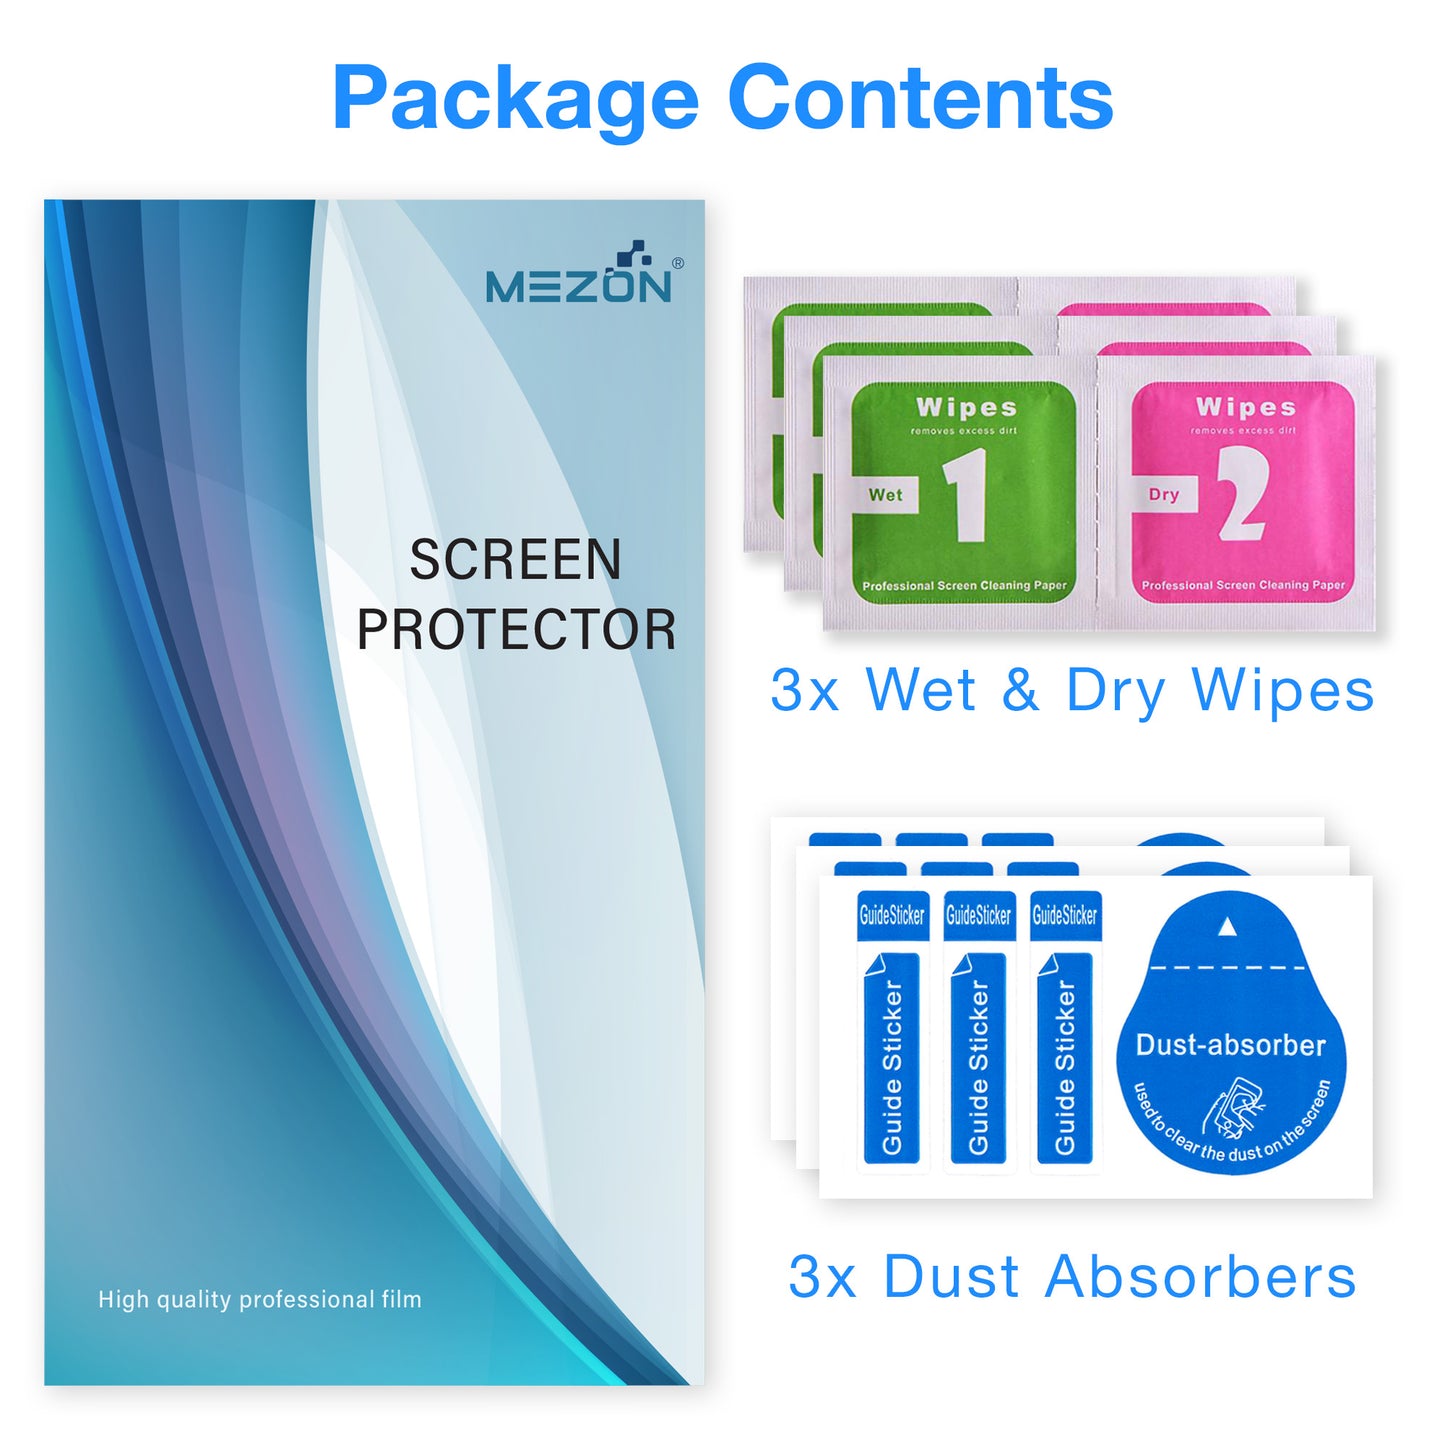 [3 Pack] MEZON Samsung Galaxy A53 5G Anti-Glare Matte Screen Protector Case Friendly Film (A53 5G, Matte)